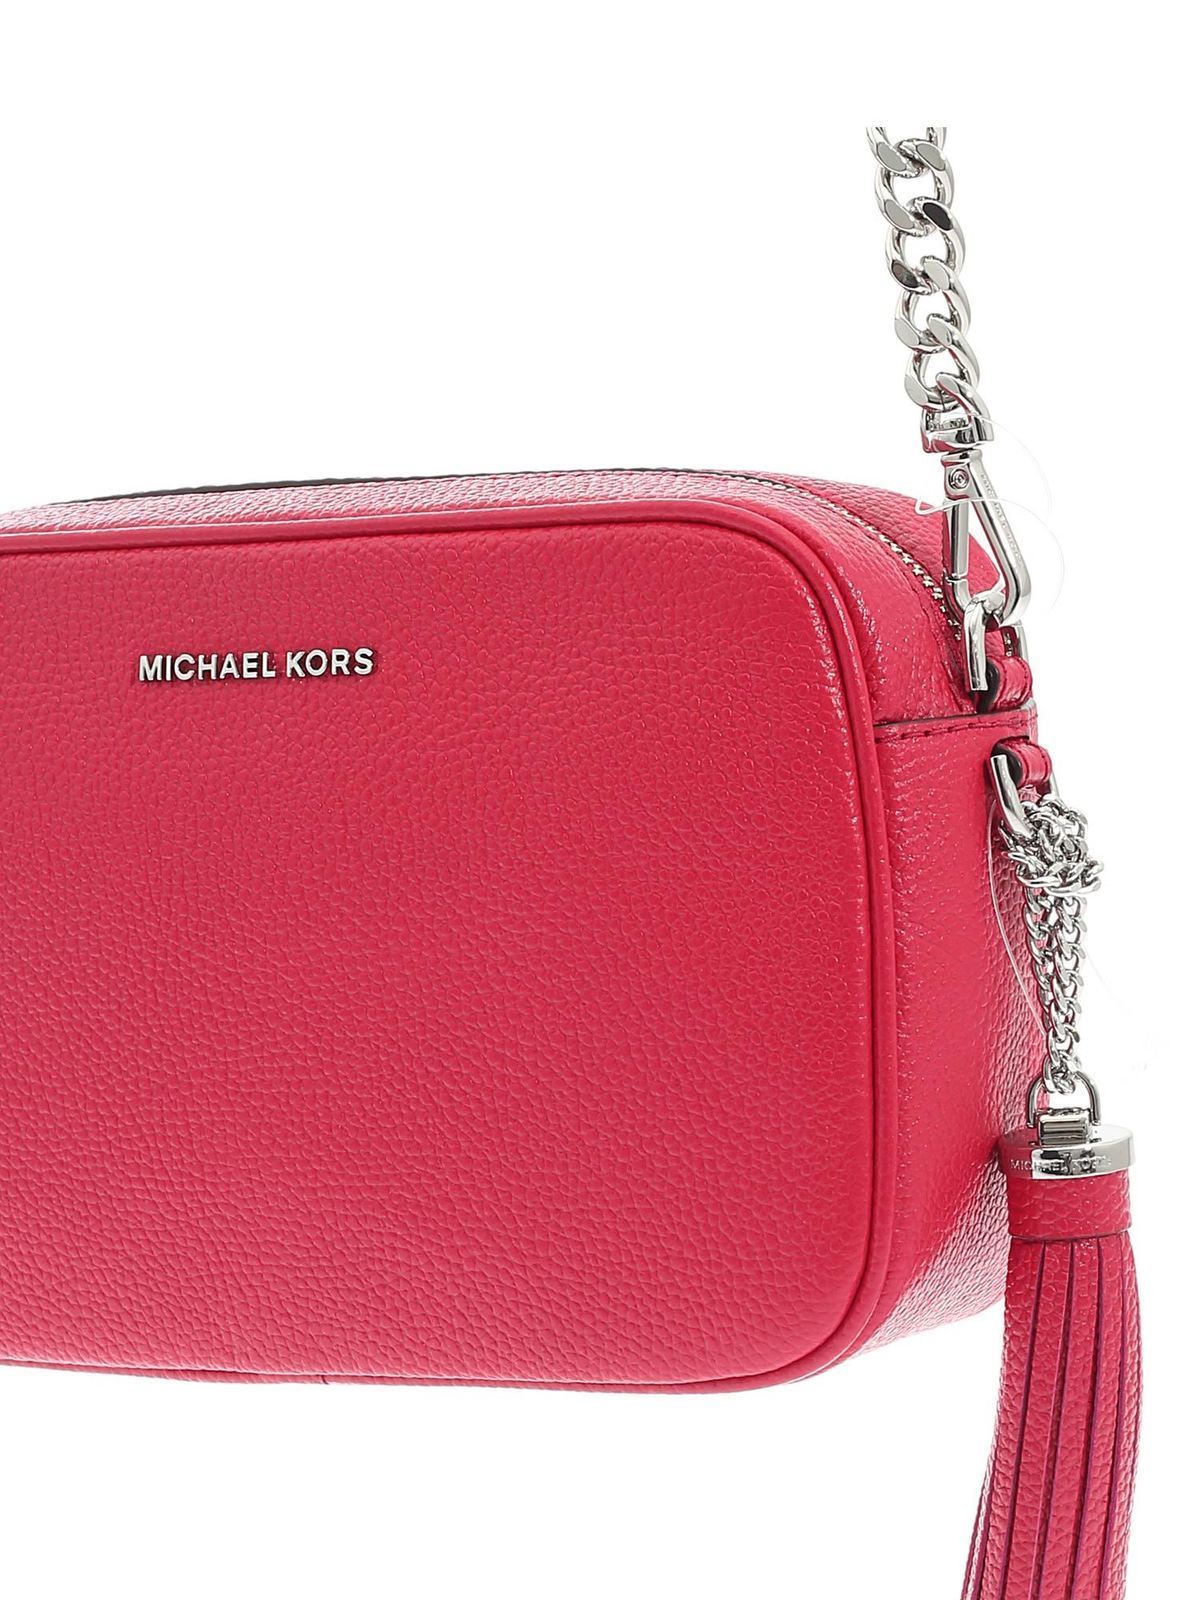 Michael Kors, Bags, Fuschia Pink Michael Kors Bag Wallet